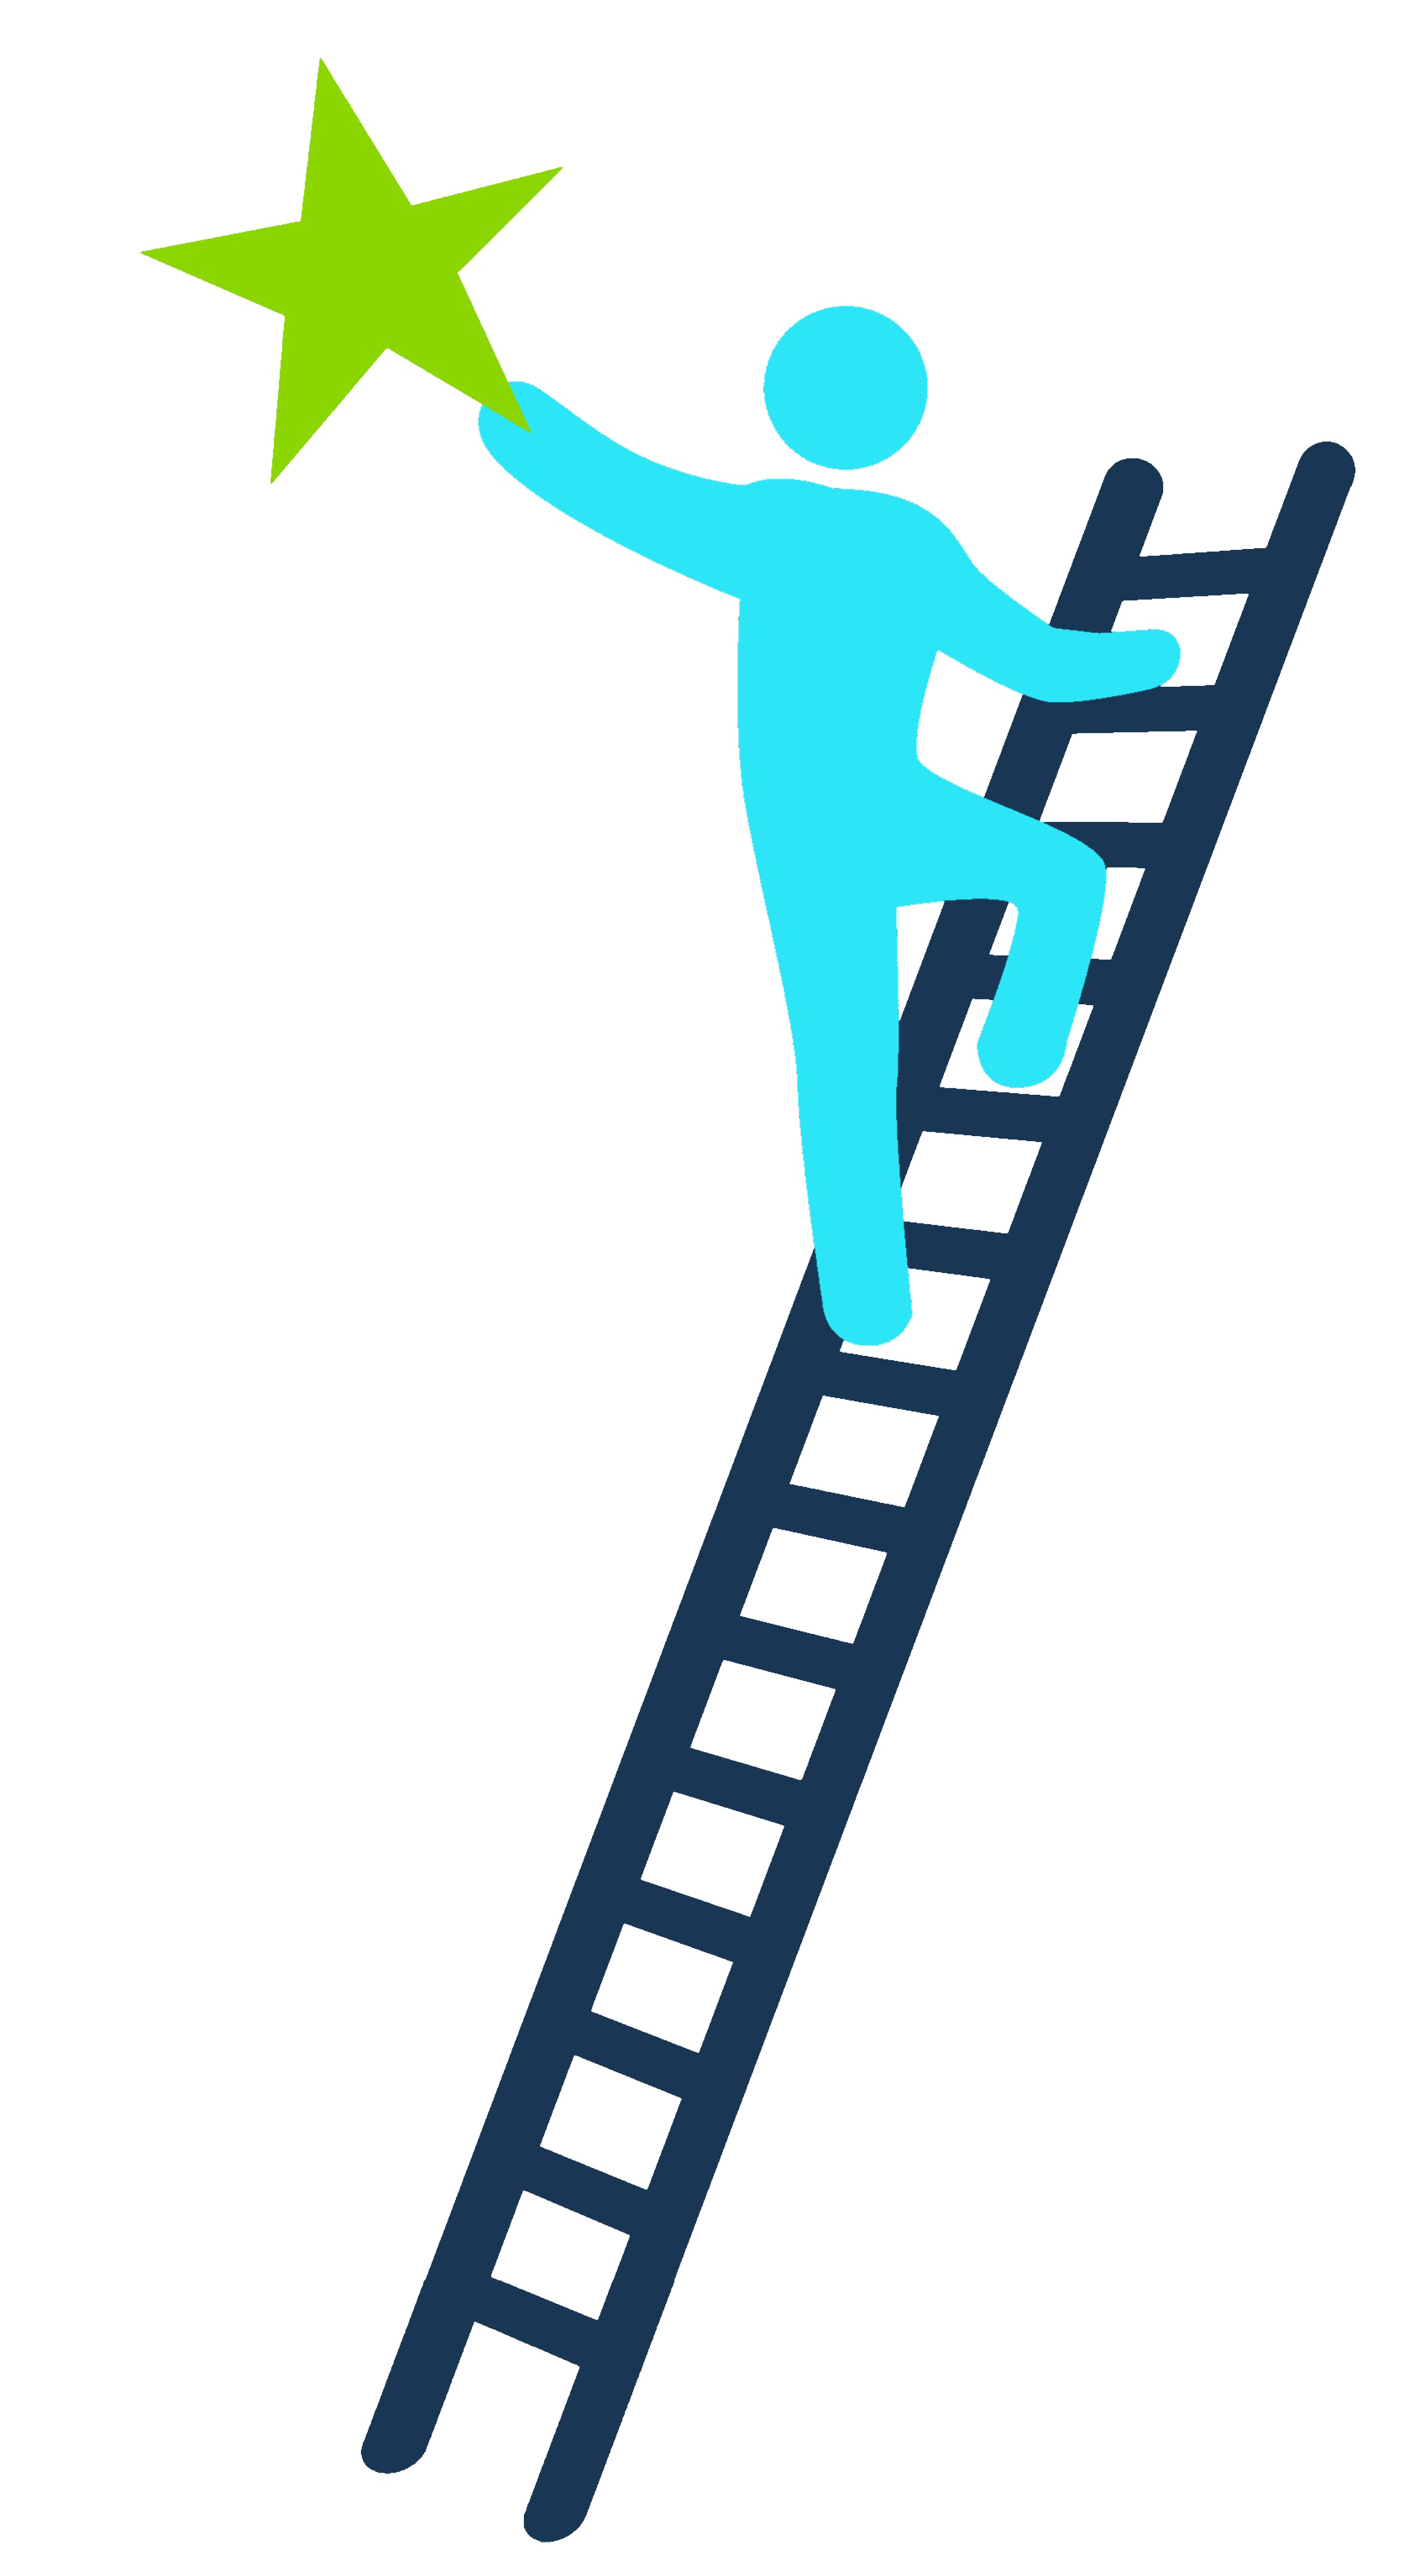 Ladder Of Success Image Free Download Image PNG Image